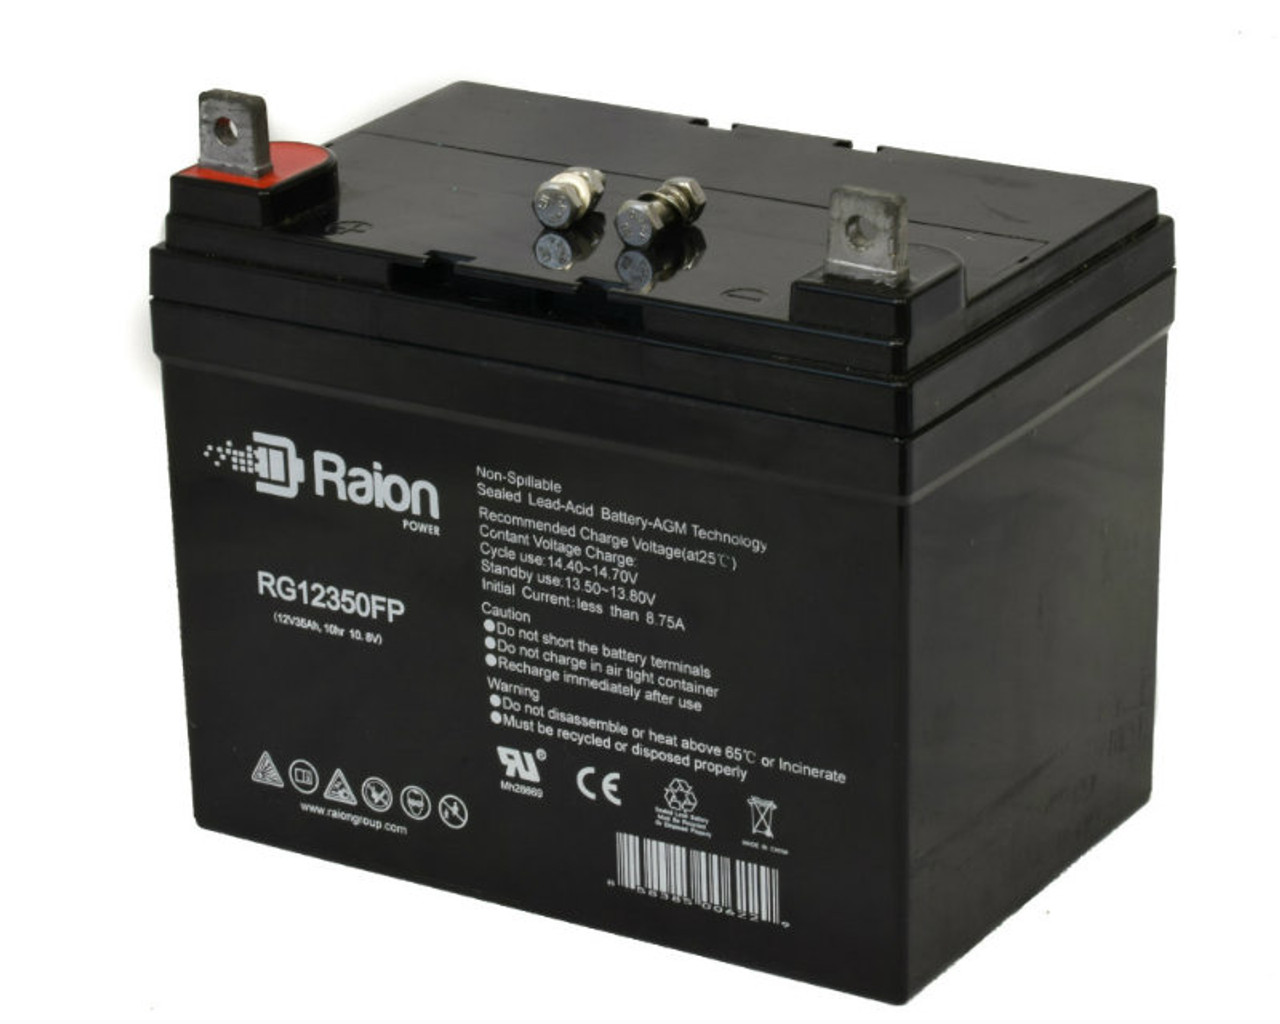 Raion Power Replacement 12V 35Ah RG12350FP Battery for Kubota B6100